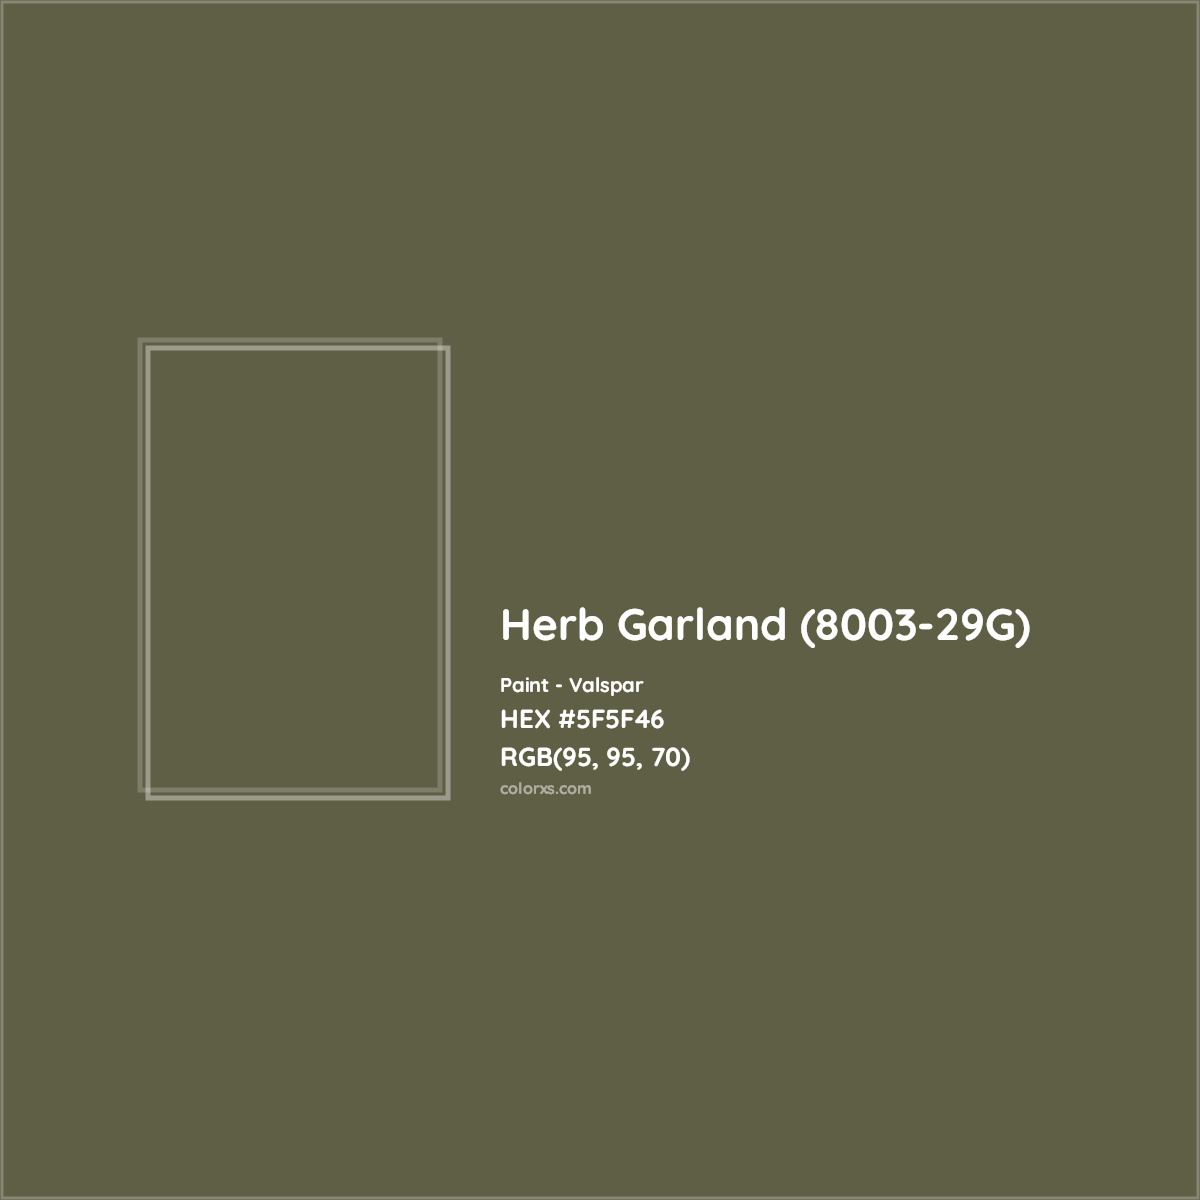 HEX #5F5F46 Herb Garland (8003-29G) Paint Valspar - Color Code